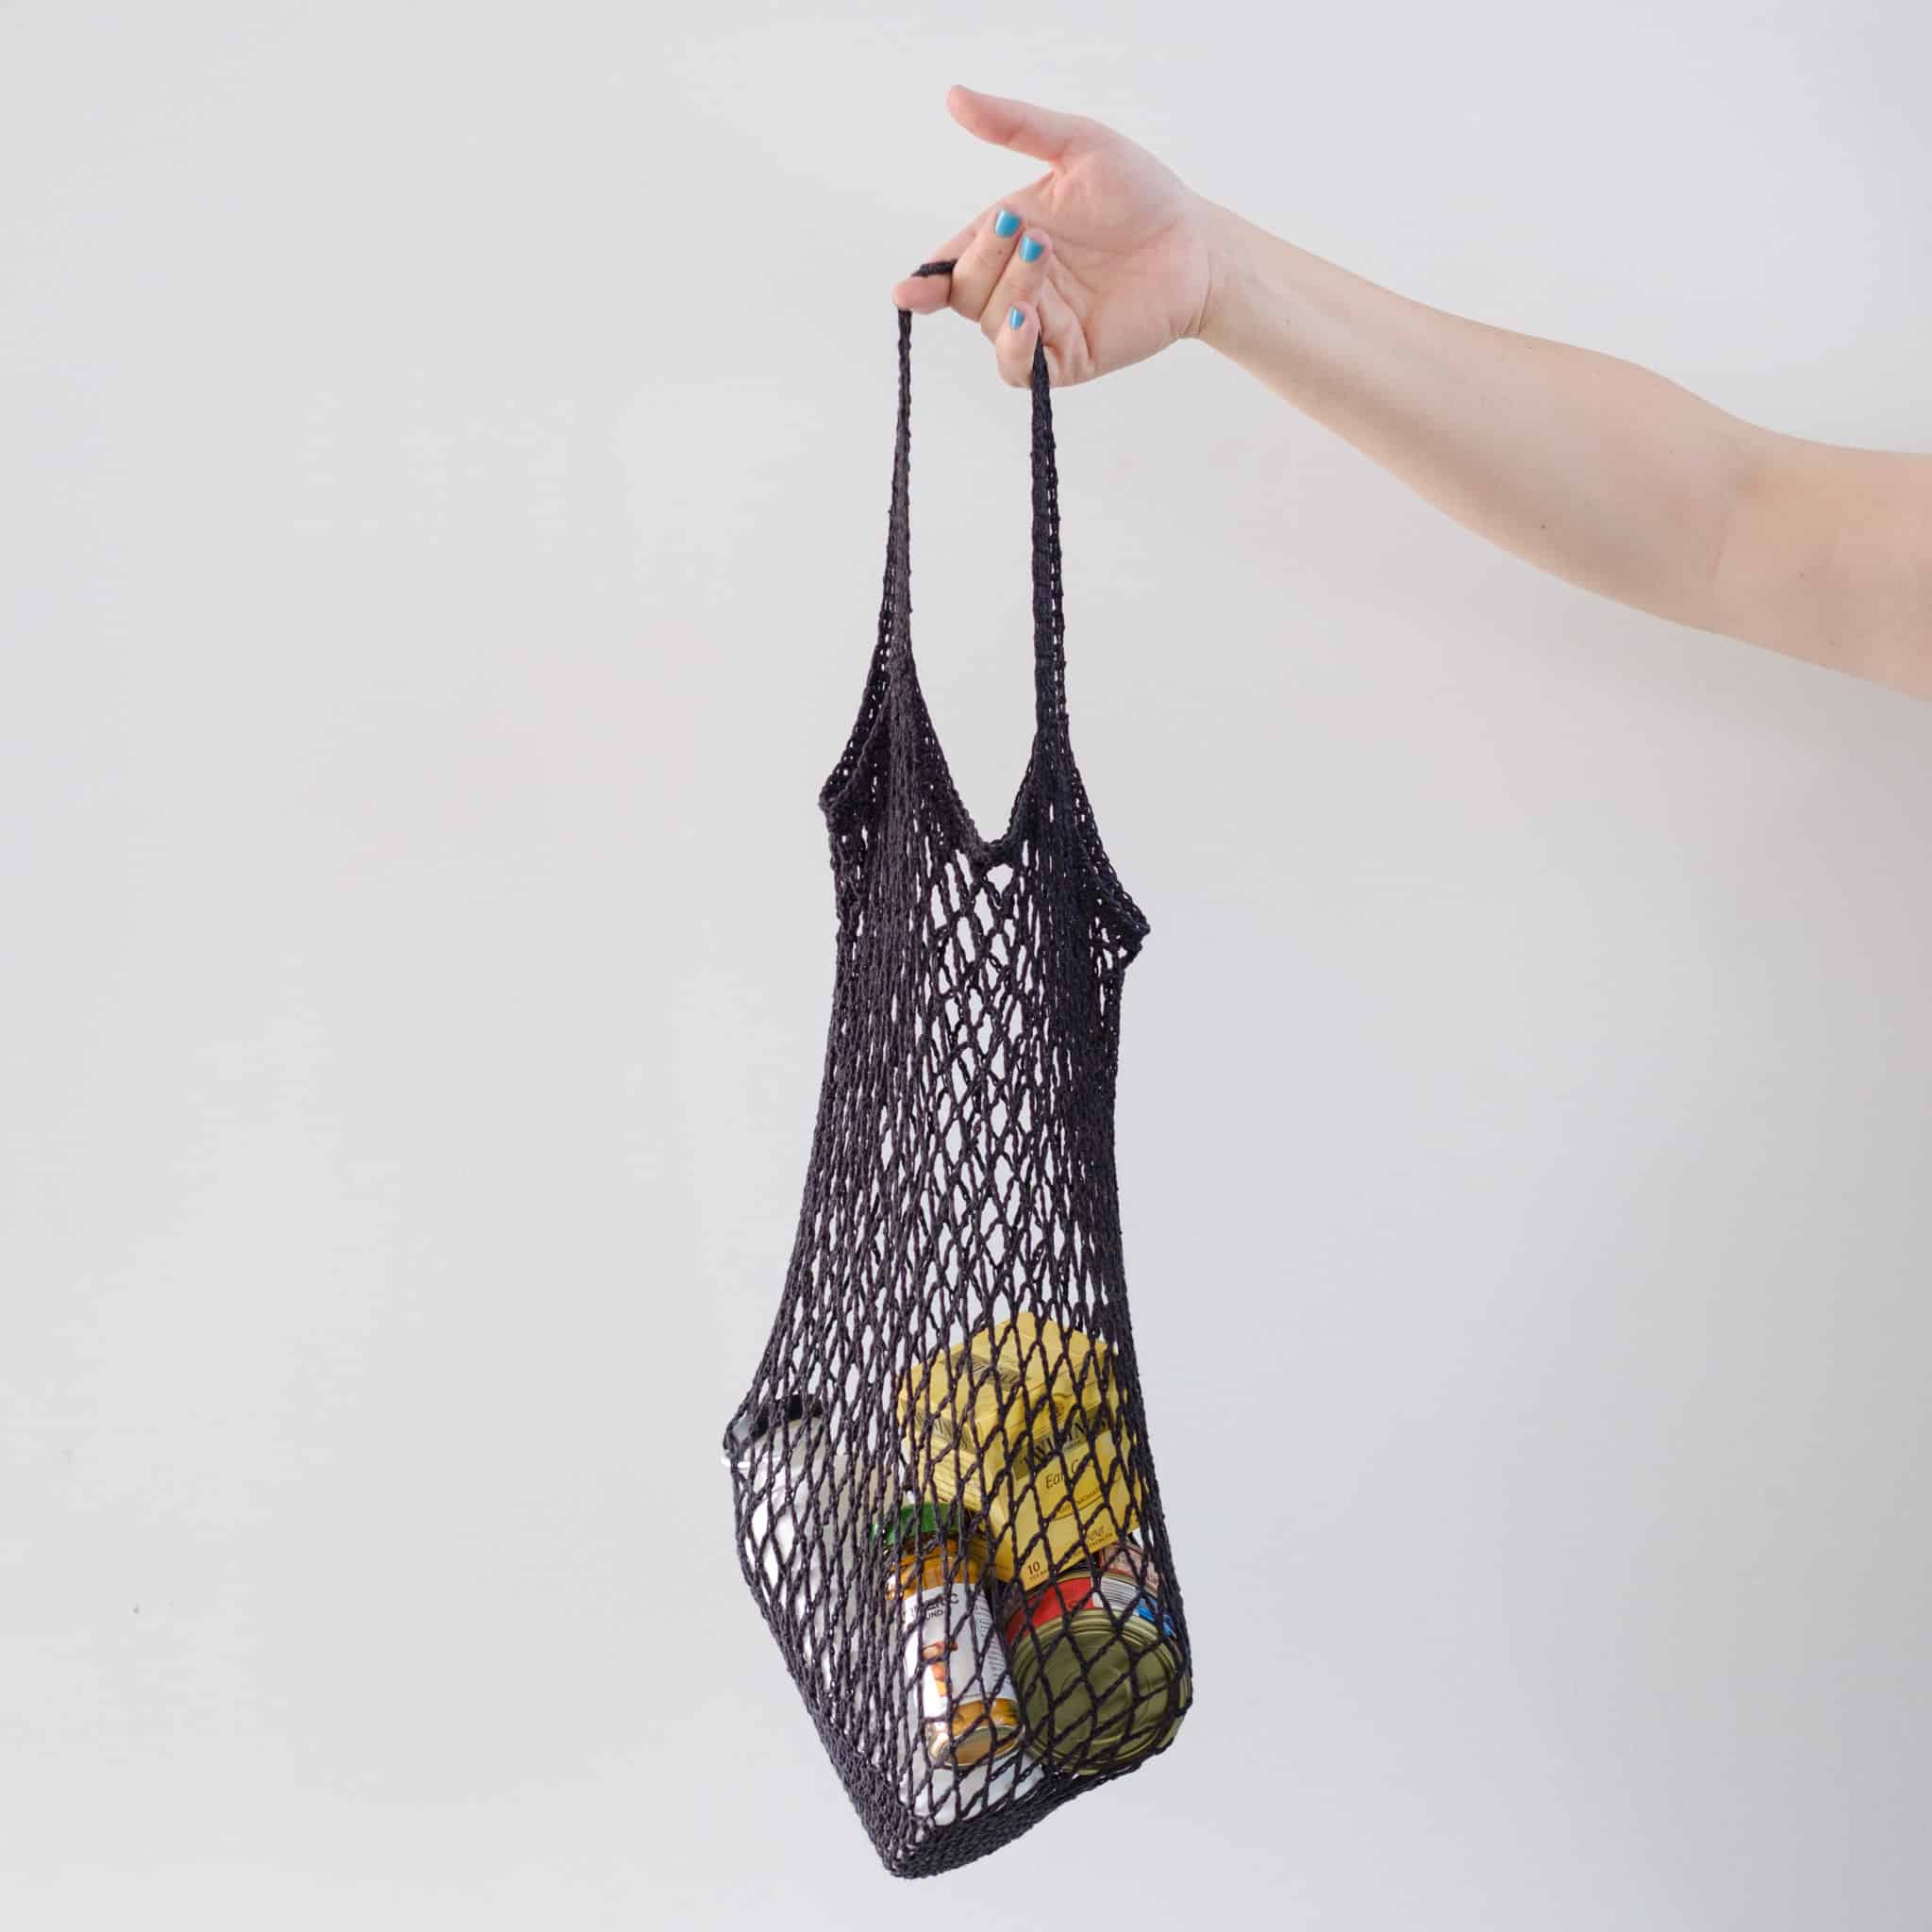 Crochet Mesh Bag from T-shirt Yarn